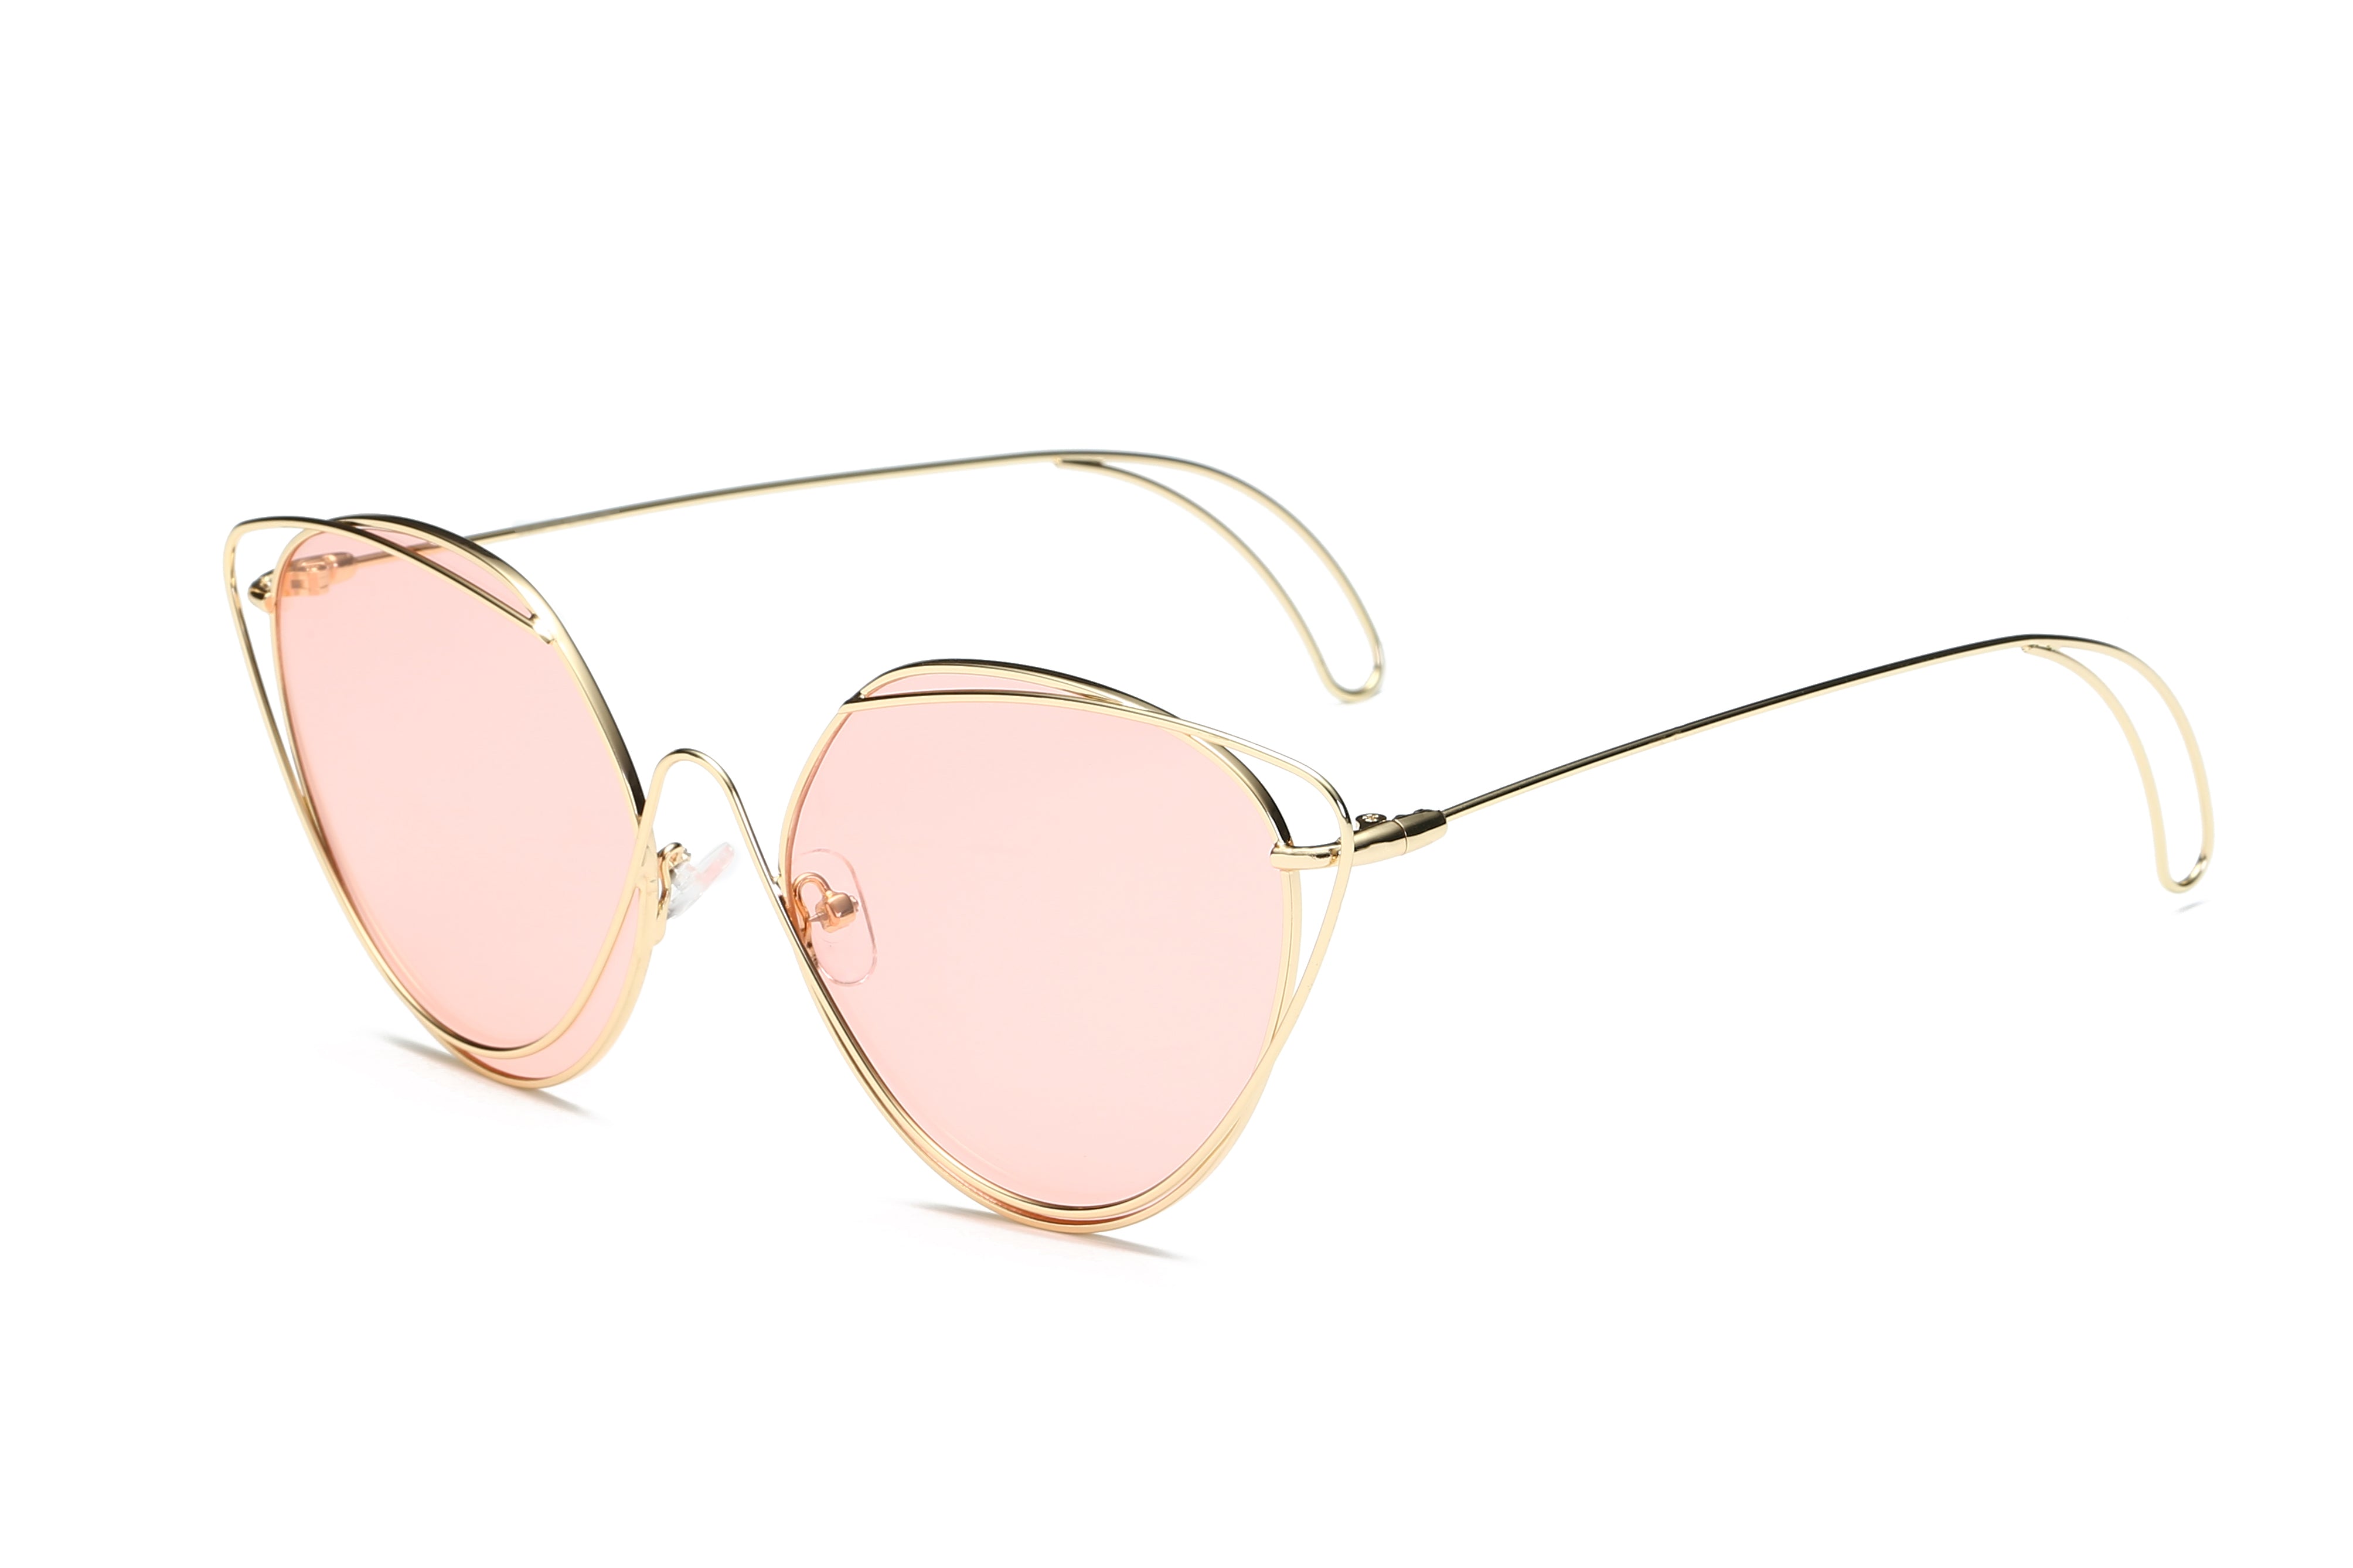 S2045 - Women Fashion Round Cat Eye SUNGLASSES Pink